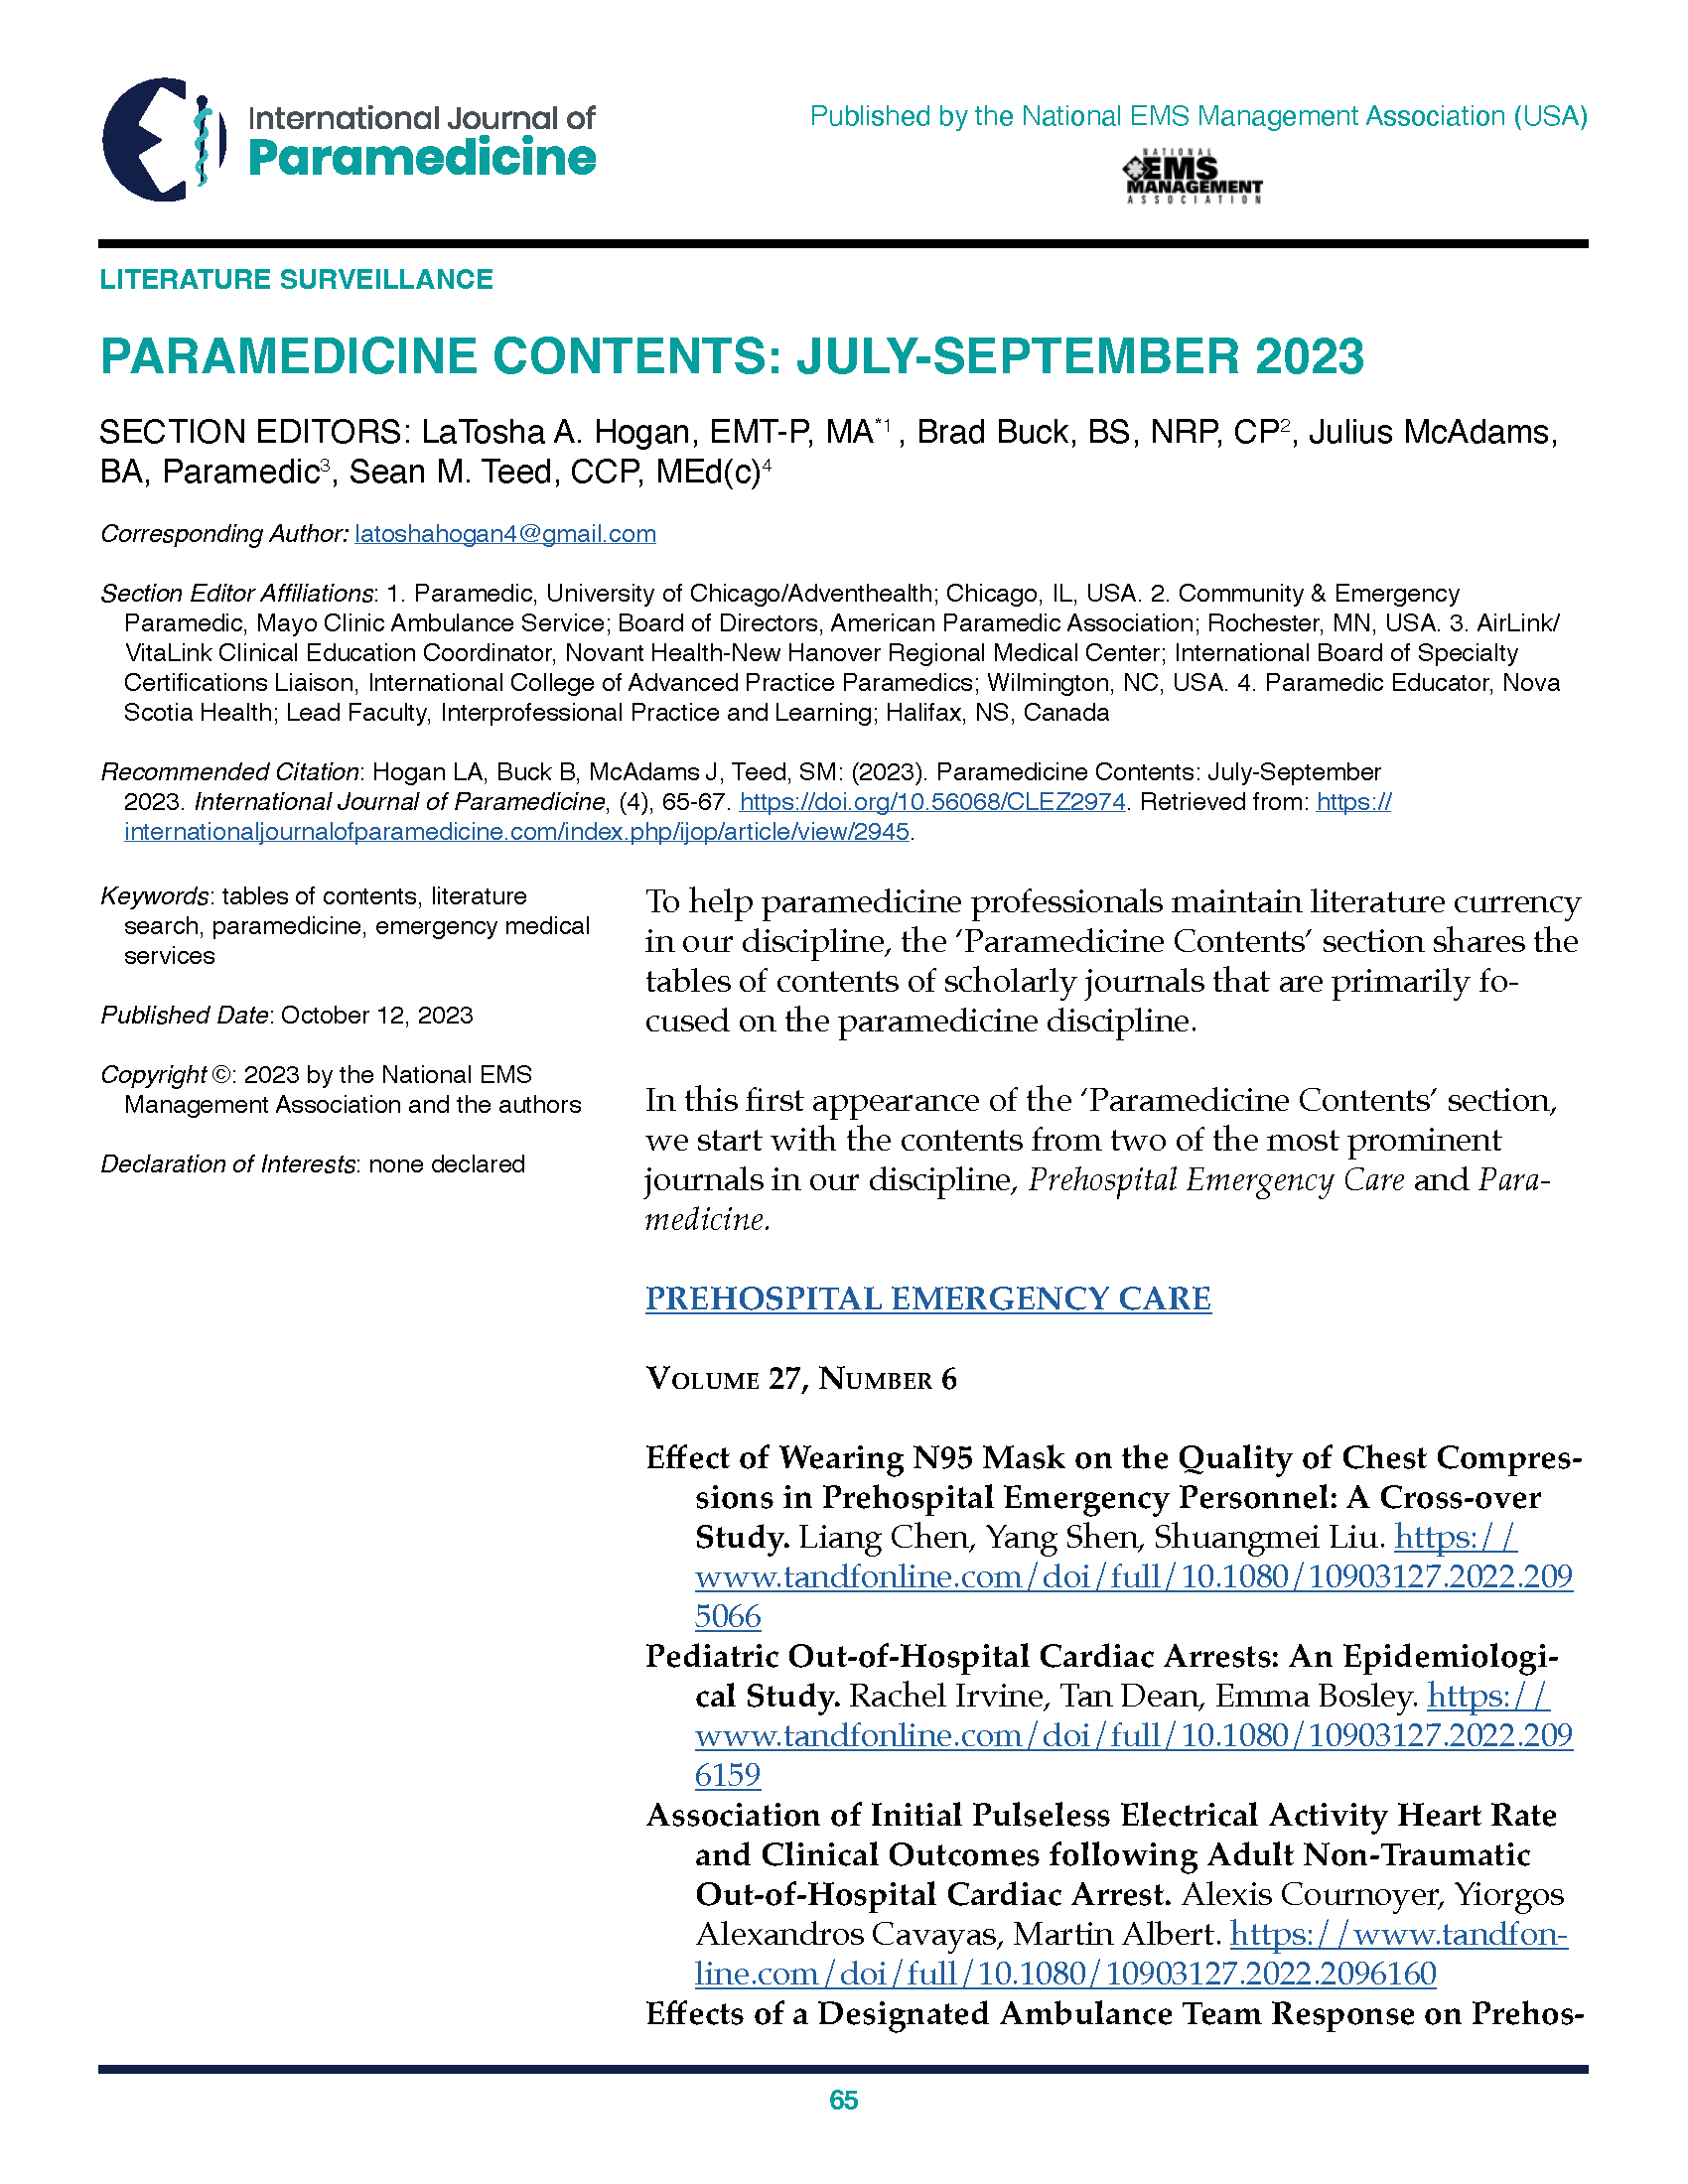 Paramedicine Contents - Page image